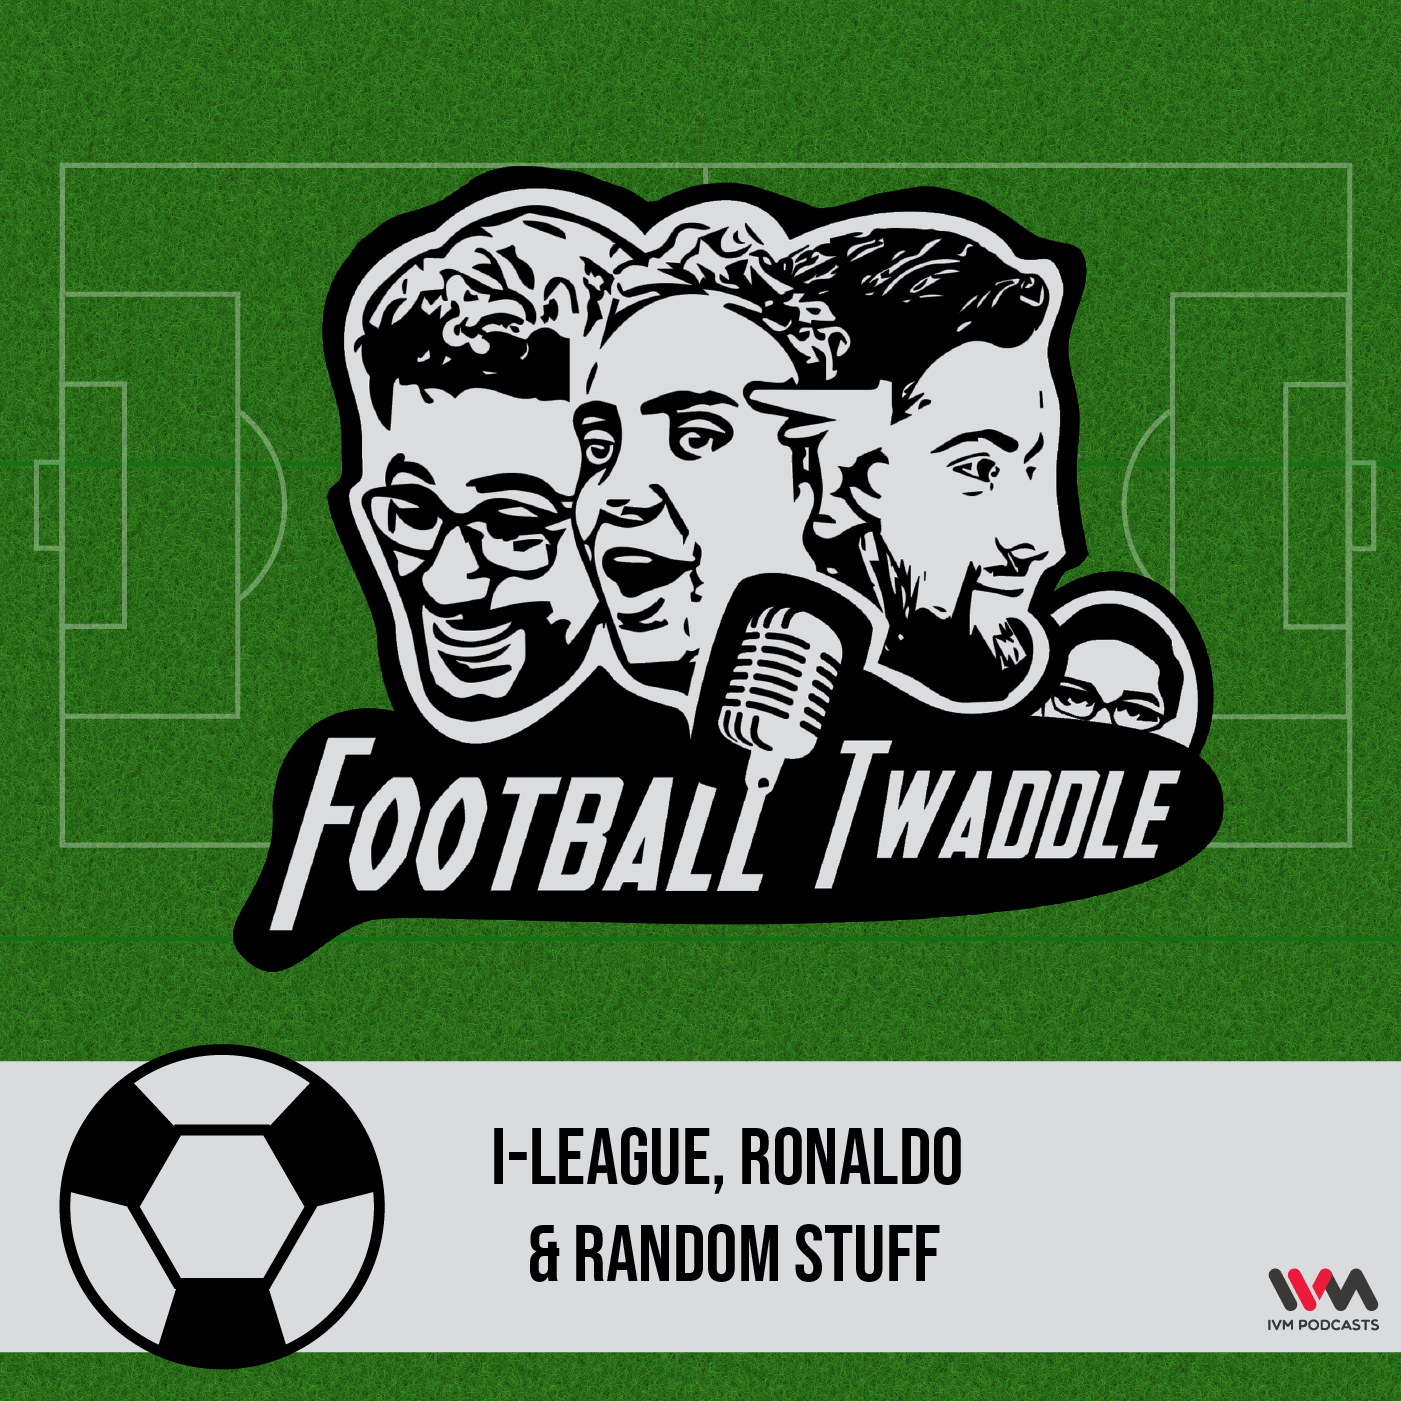 I-league, Ronaldo & Random Stuff